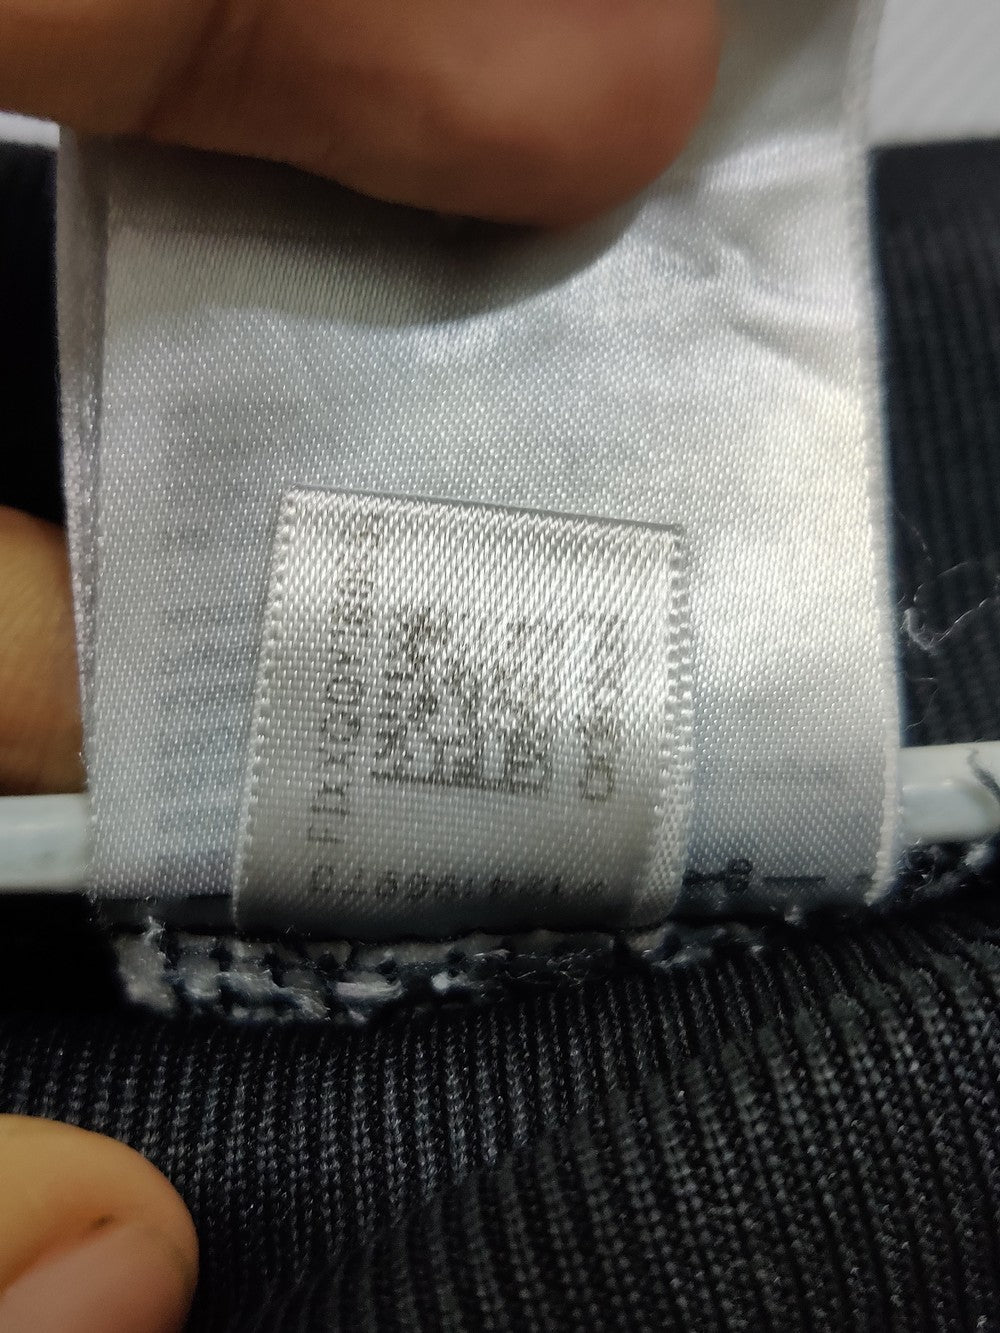 Adidas Branded Original Sports Trouser For Women